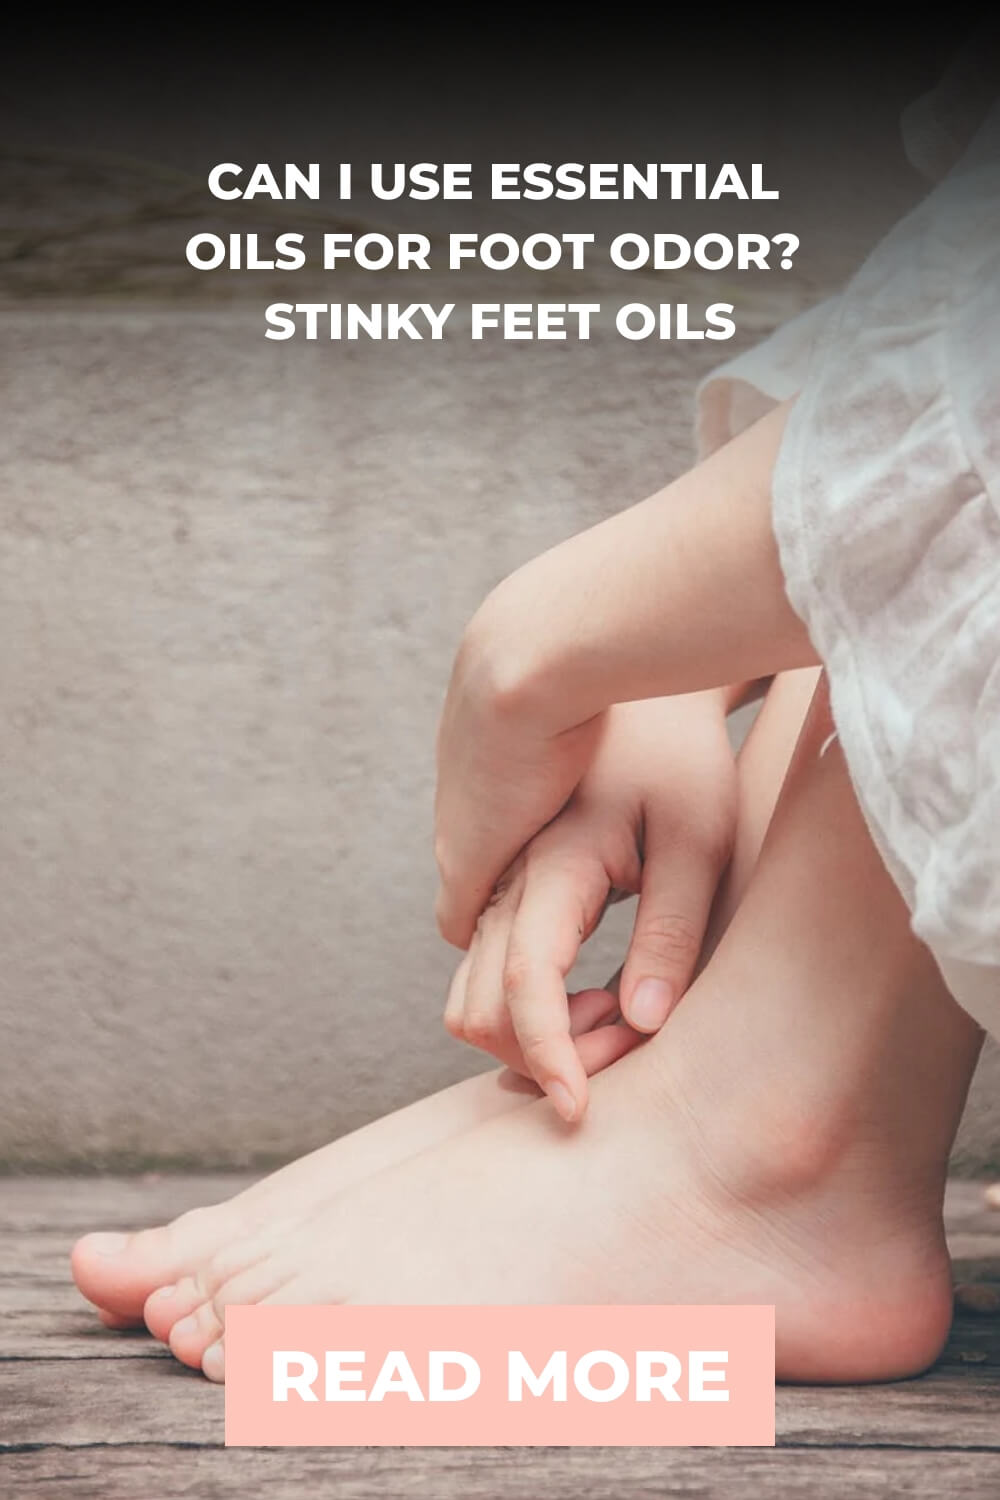 Essential Oils for Foot Odor by Loving Essential Oils